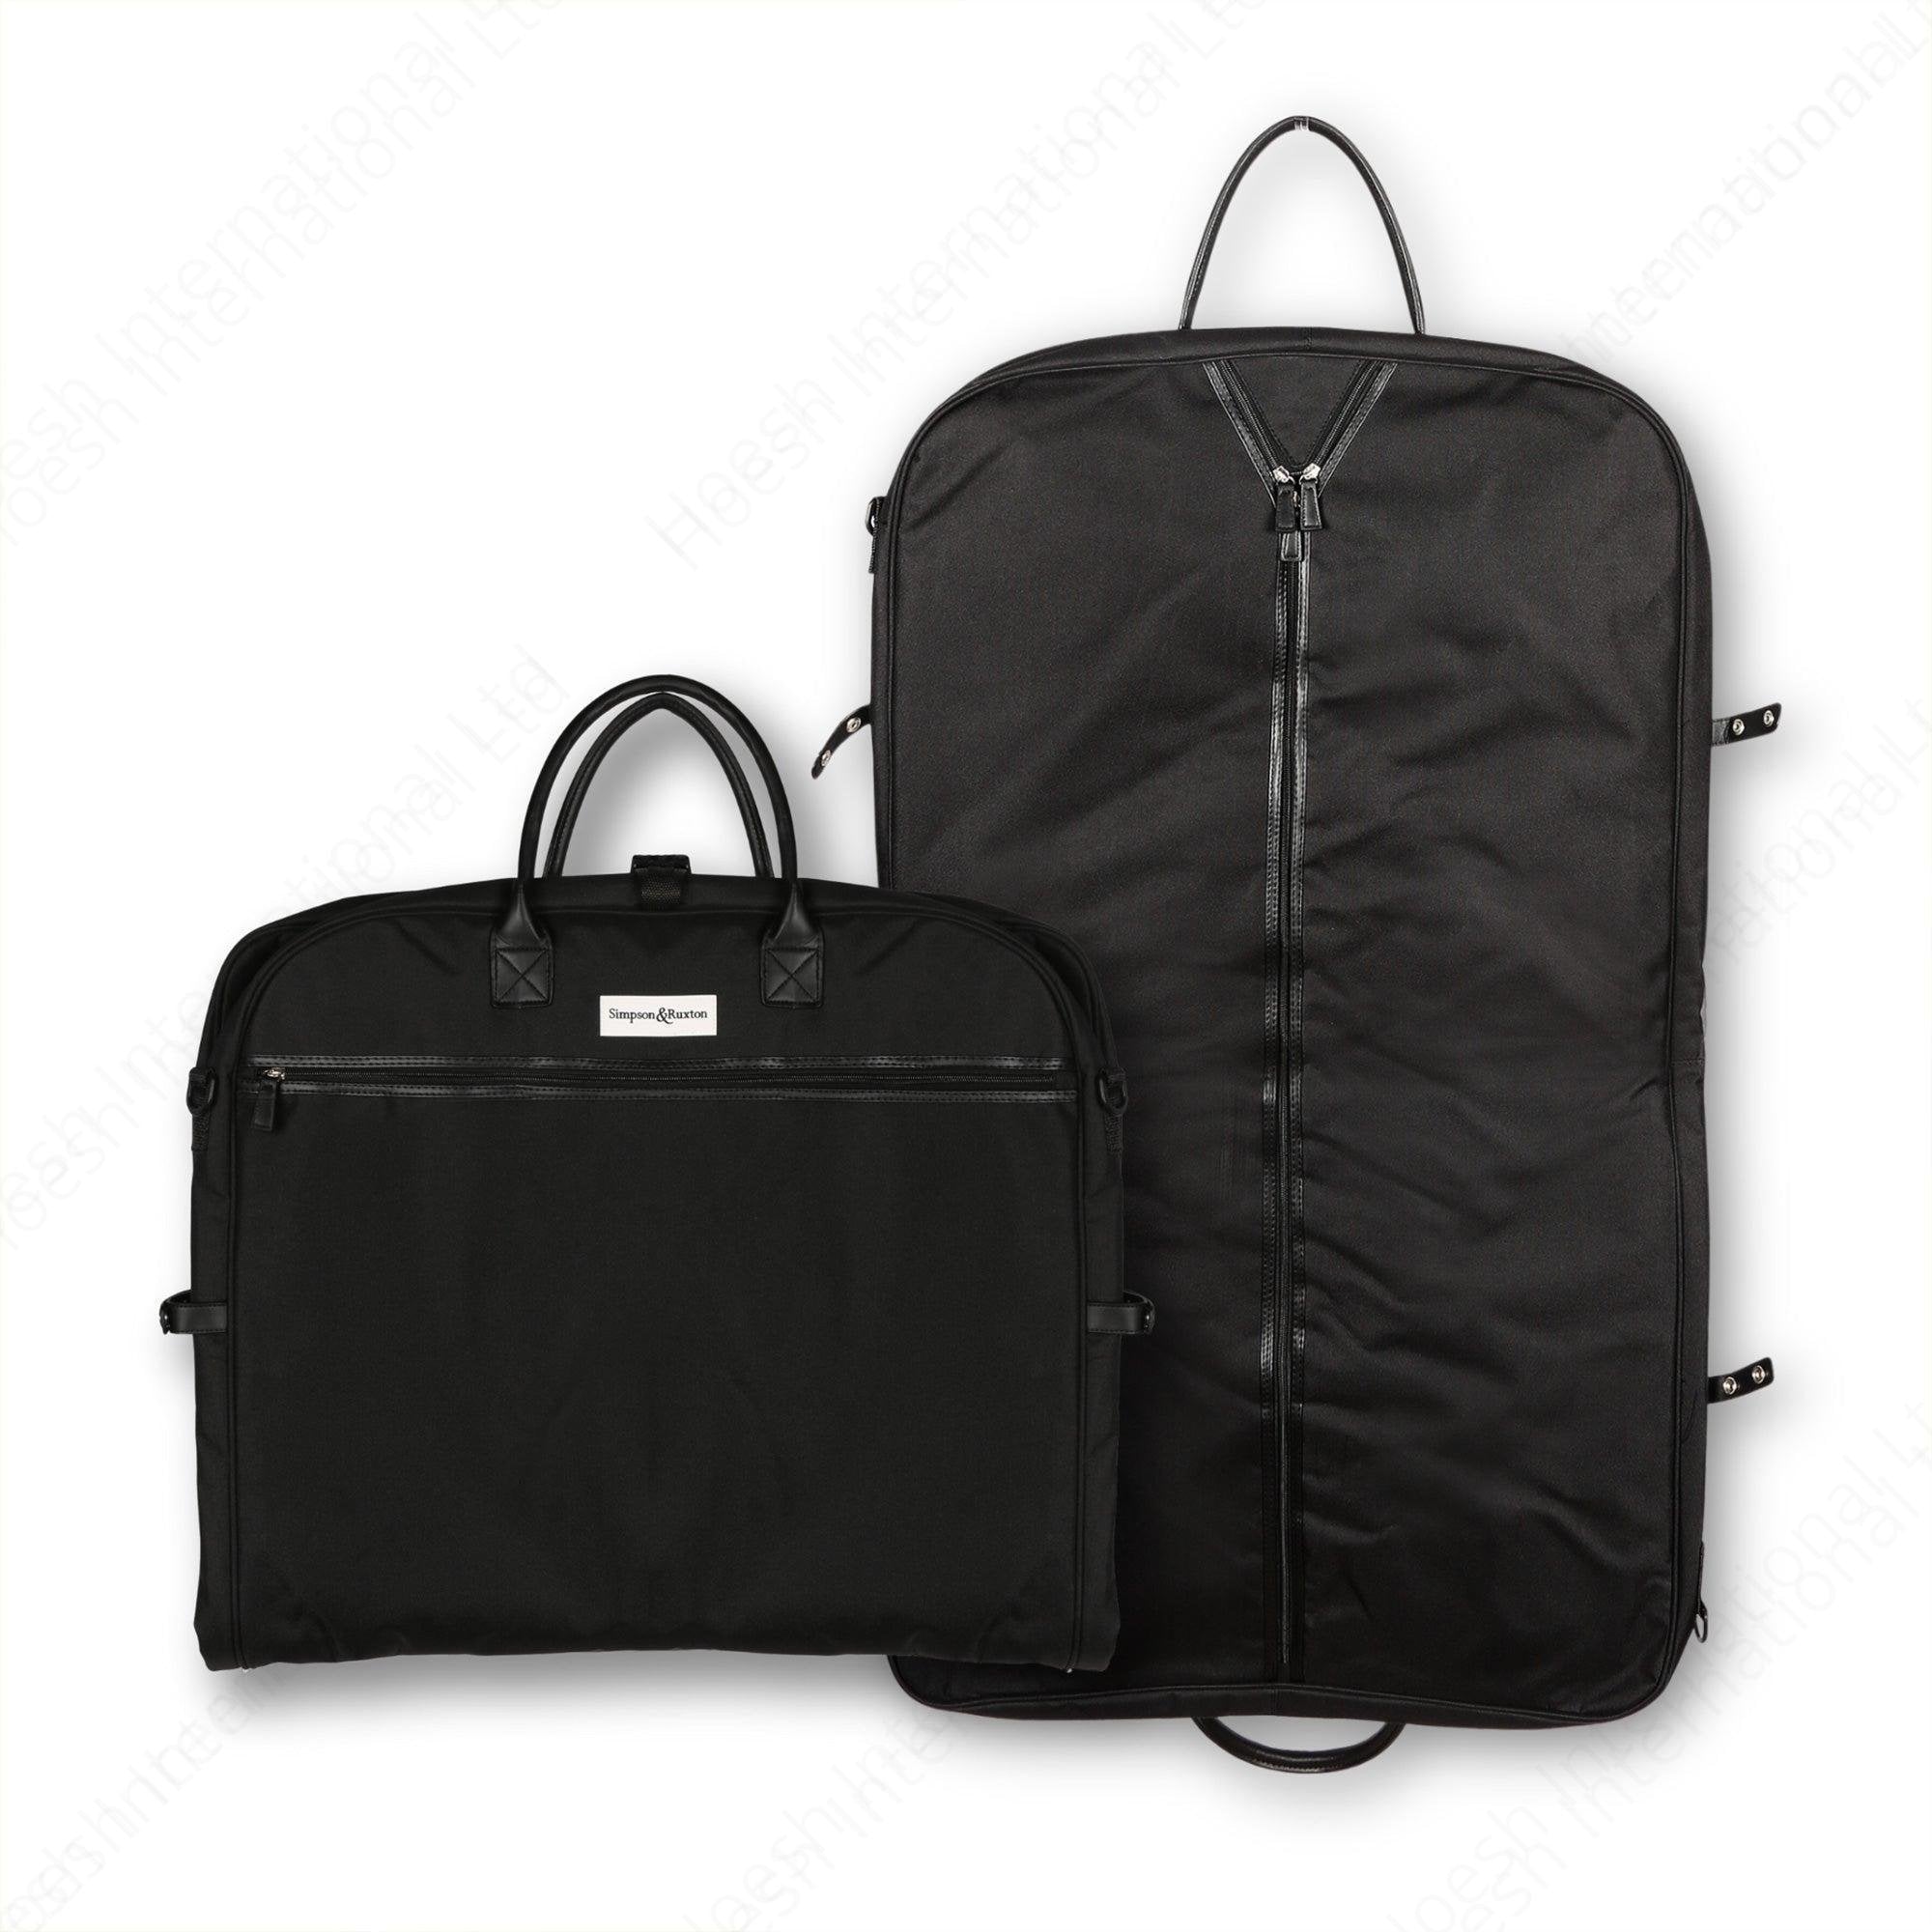 Simpson & Ruxton Black 42" Luxury Heavy Duty Garment Travel Luggage Suit/Dress Carrier - Hoesh International Ltd